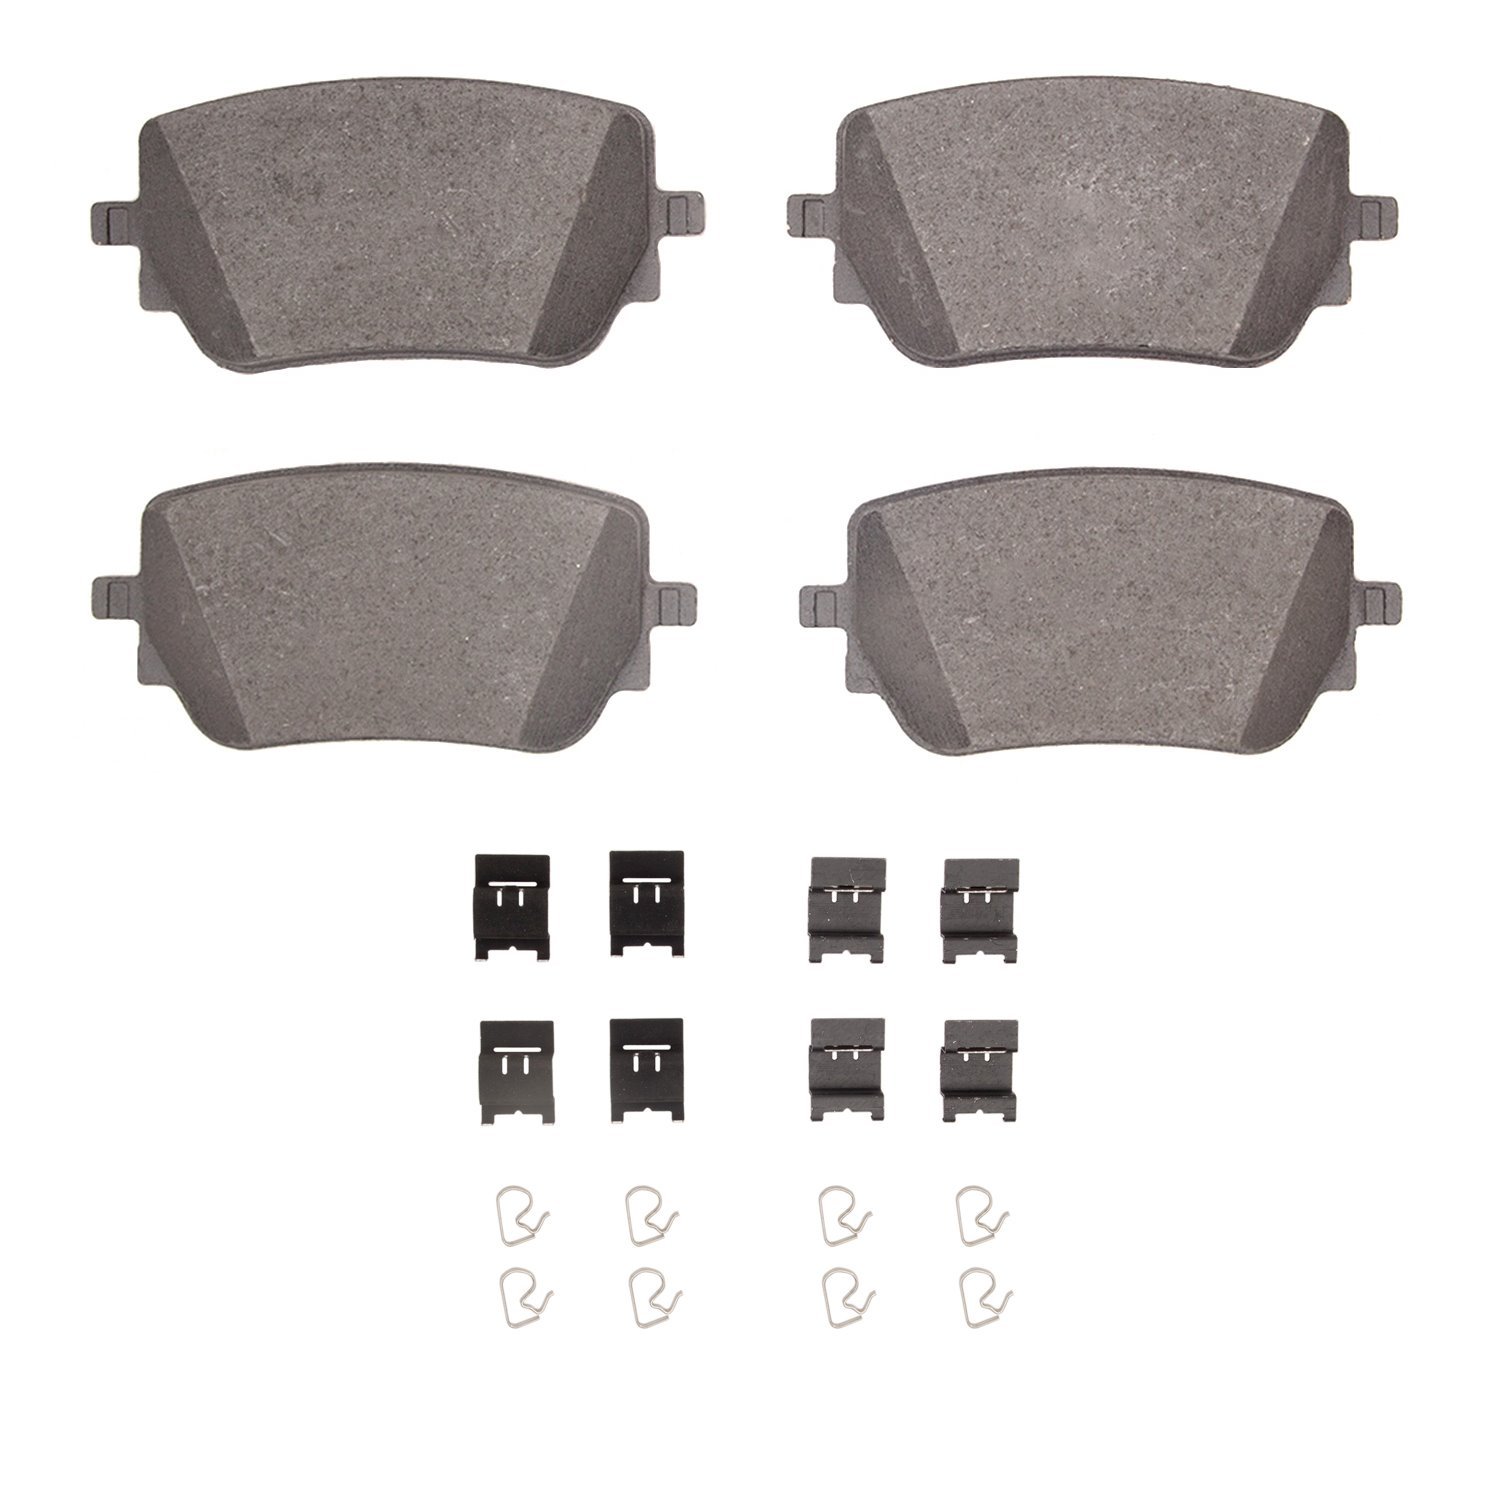 1552-2271-01 5000 Advanced Low-Metallic Brake Pads & Hardware Kit, Fits Select Mercedes-Benz, Position: Rear